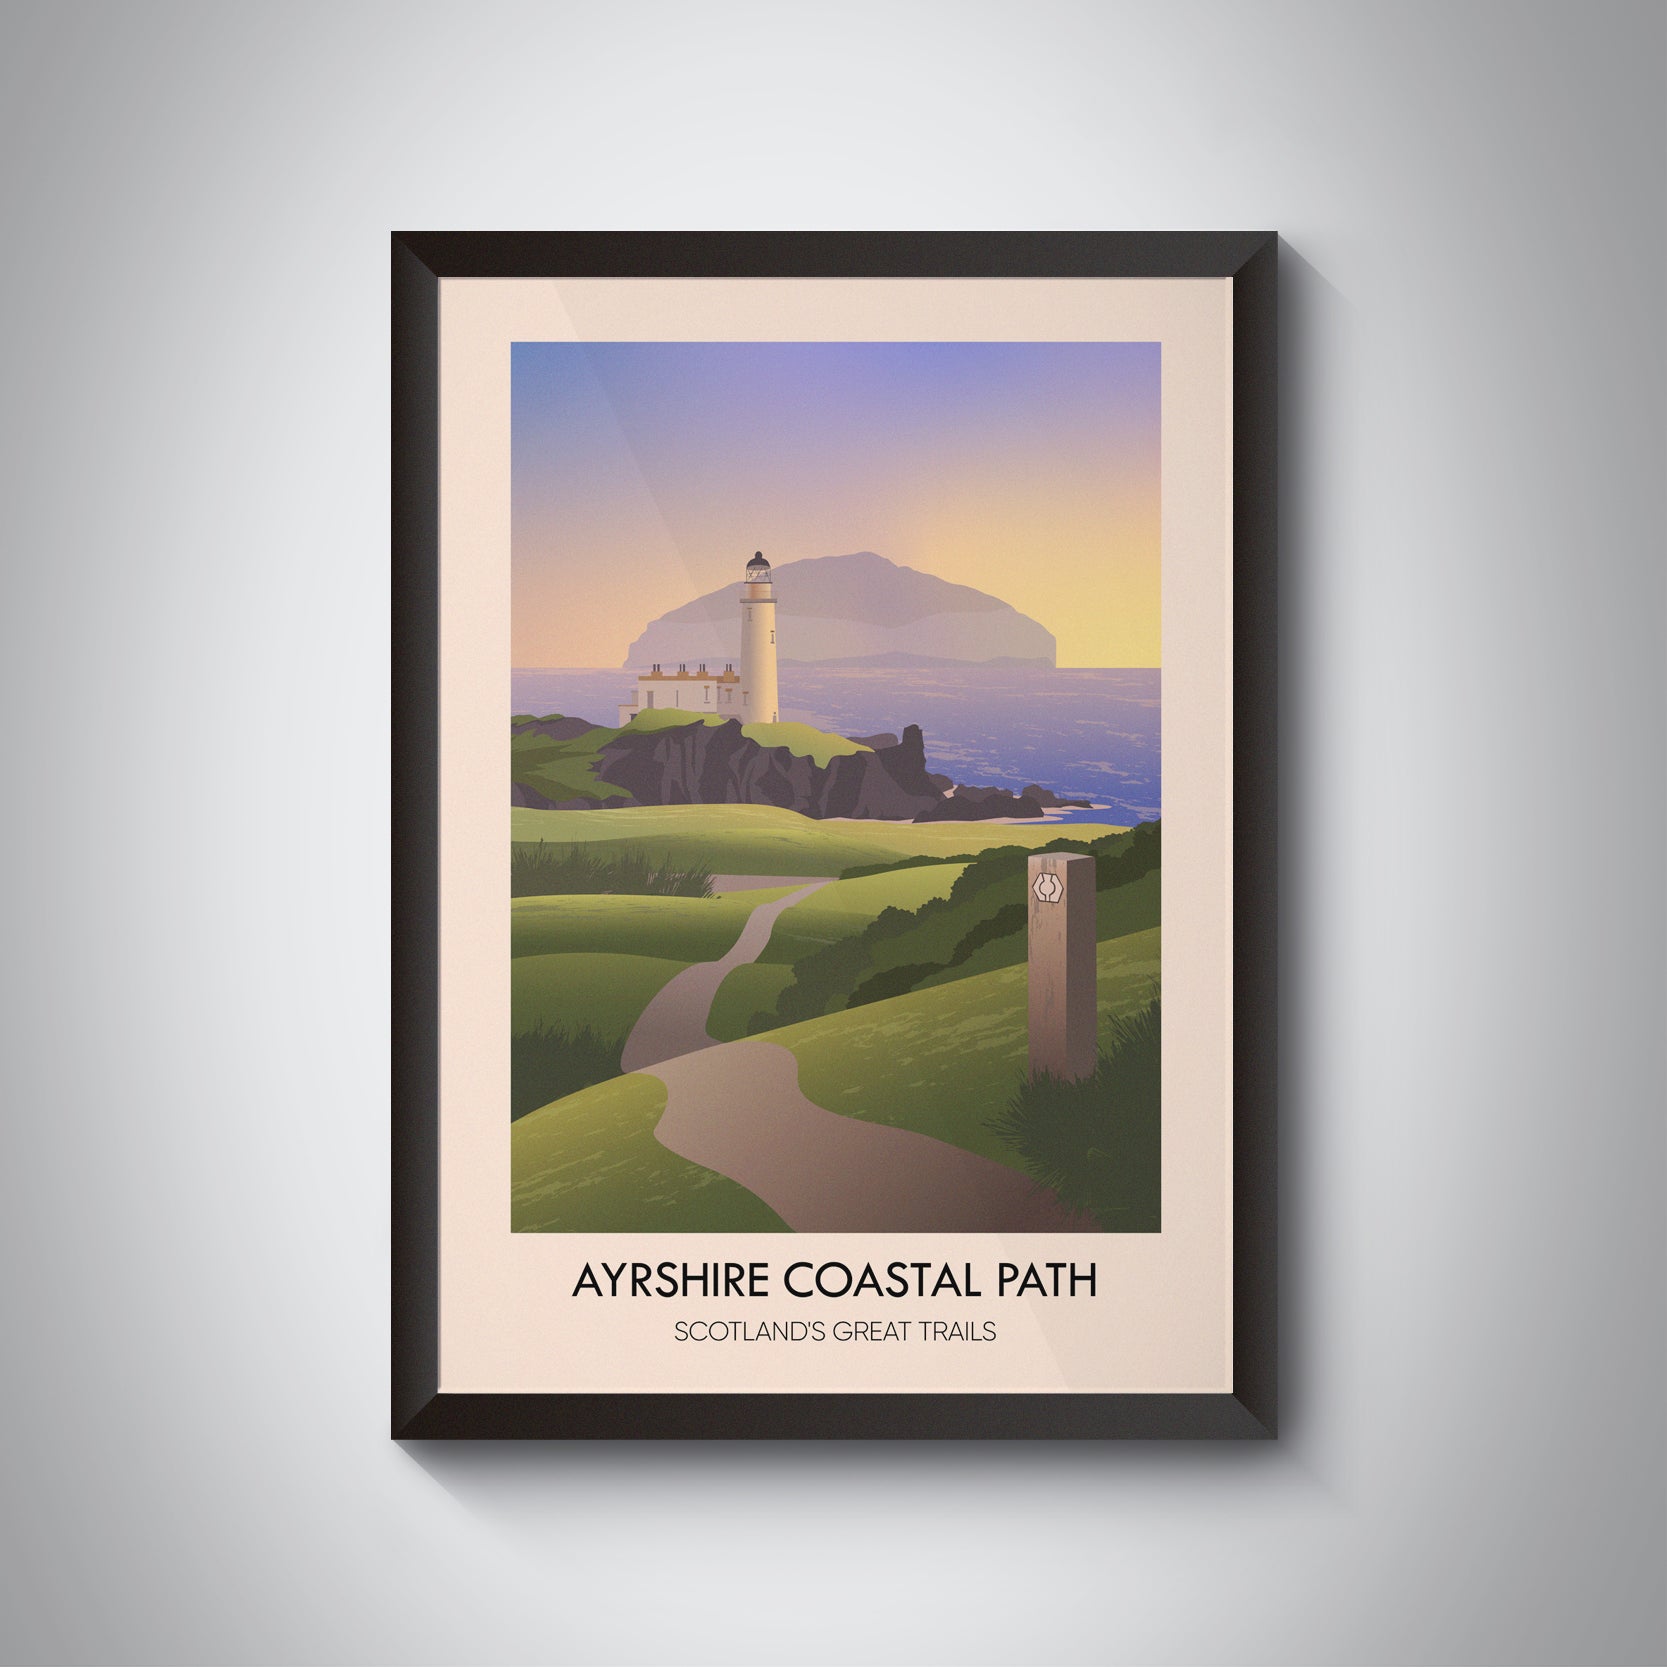 Ayrshire Coastal Path Scotland's Great Trails Poster